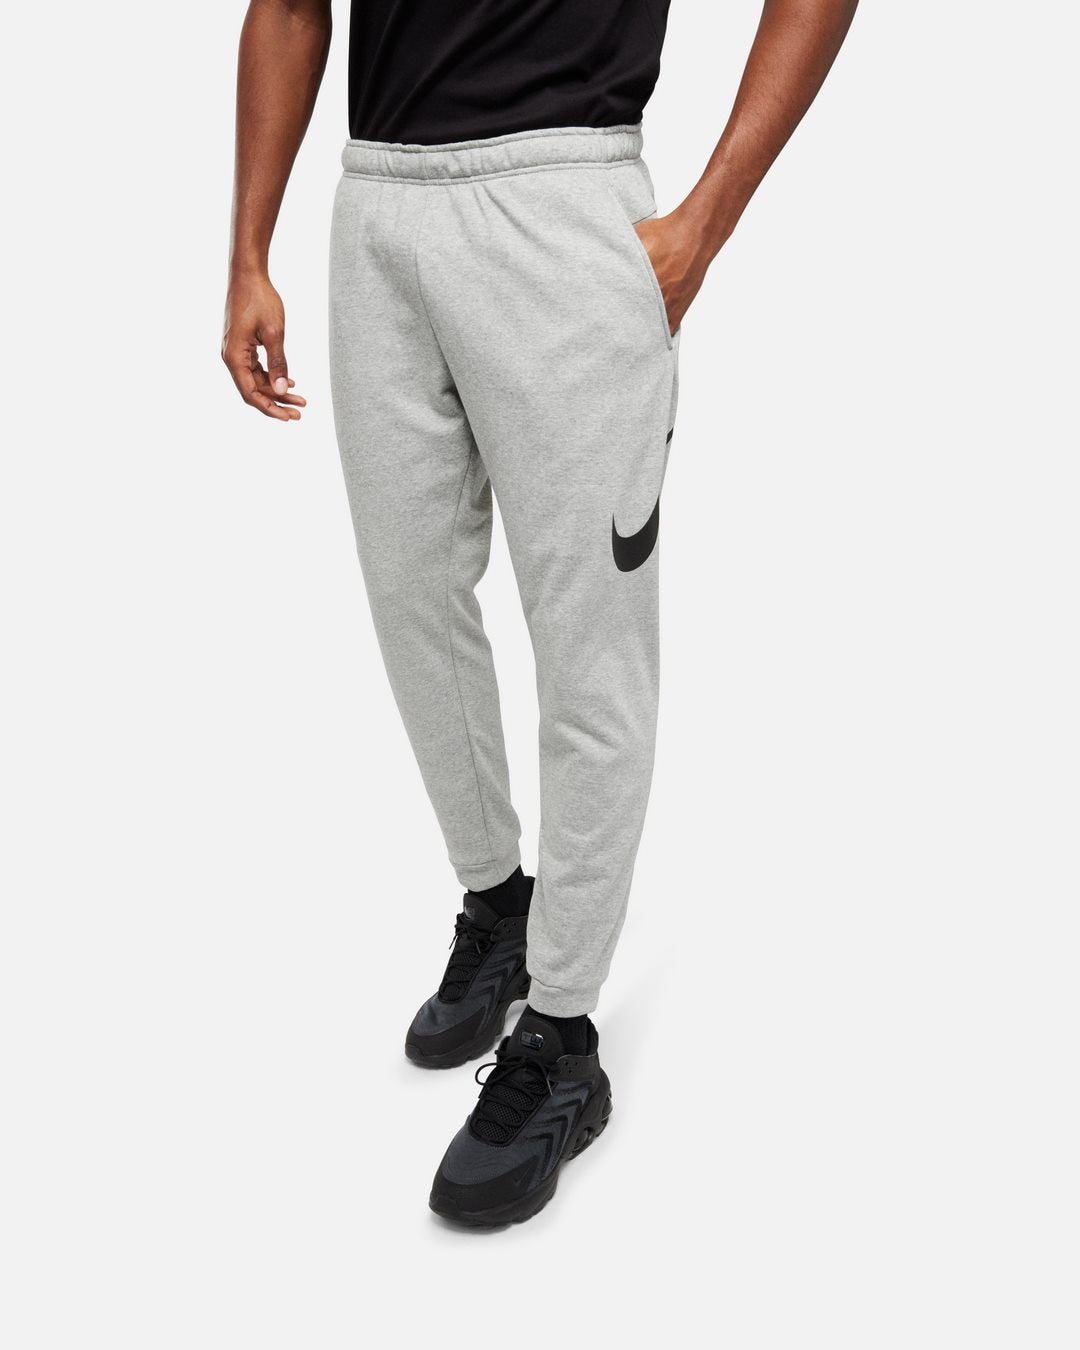 Pantalon Nike Dry Graphic - Gris/Noir